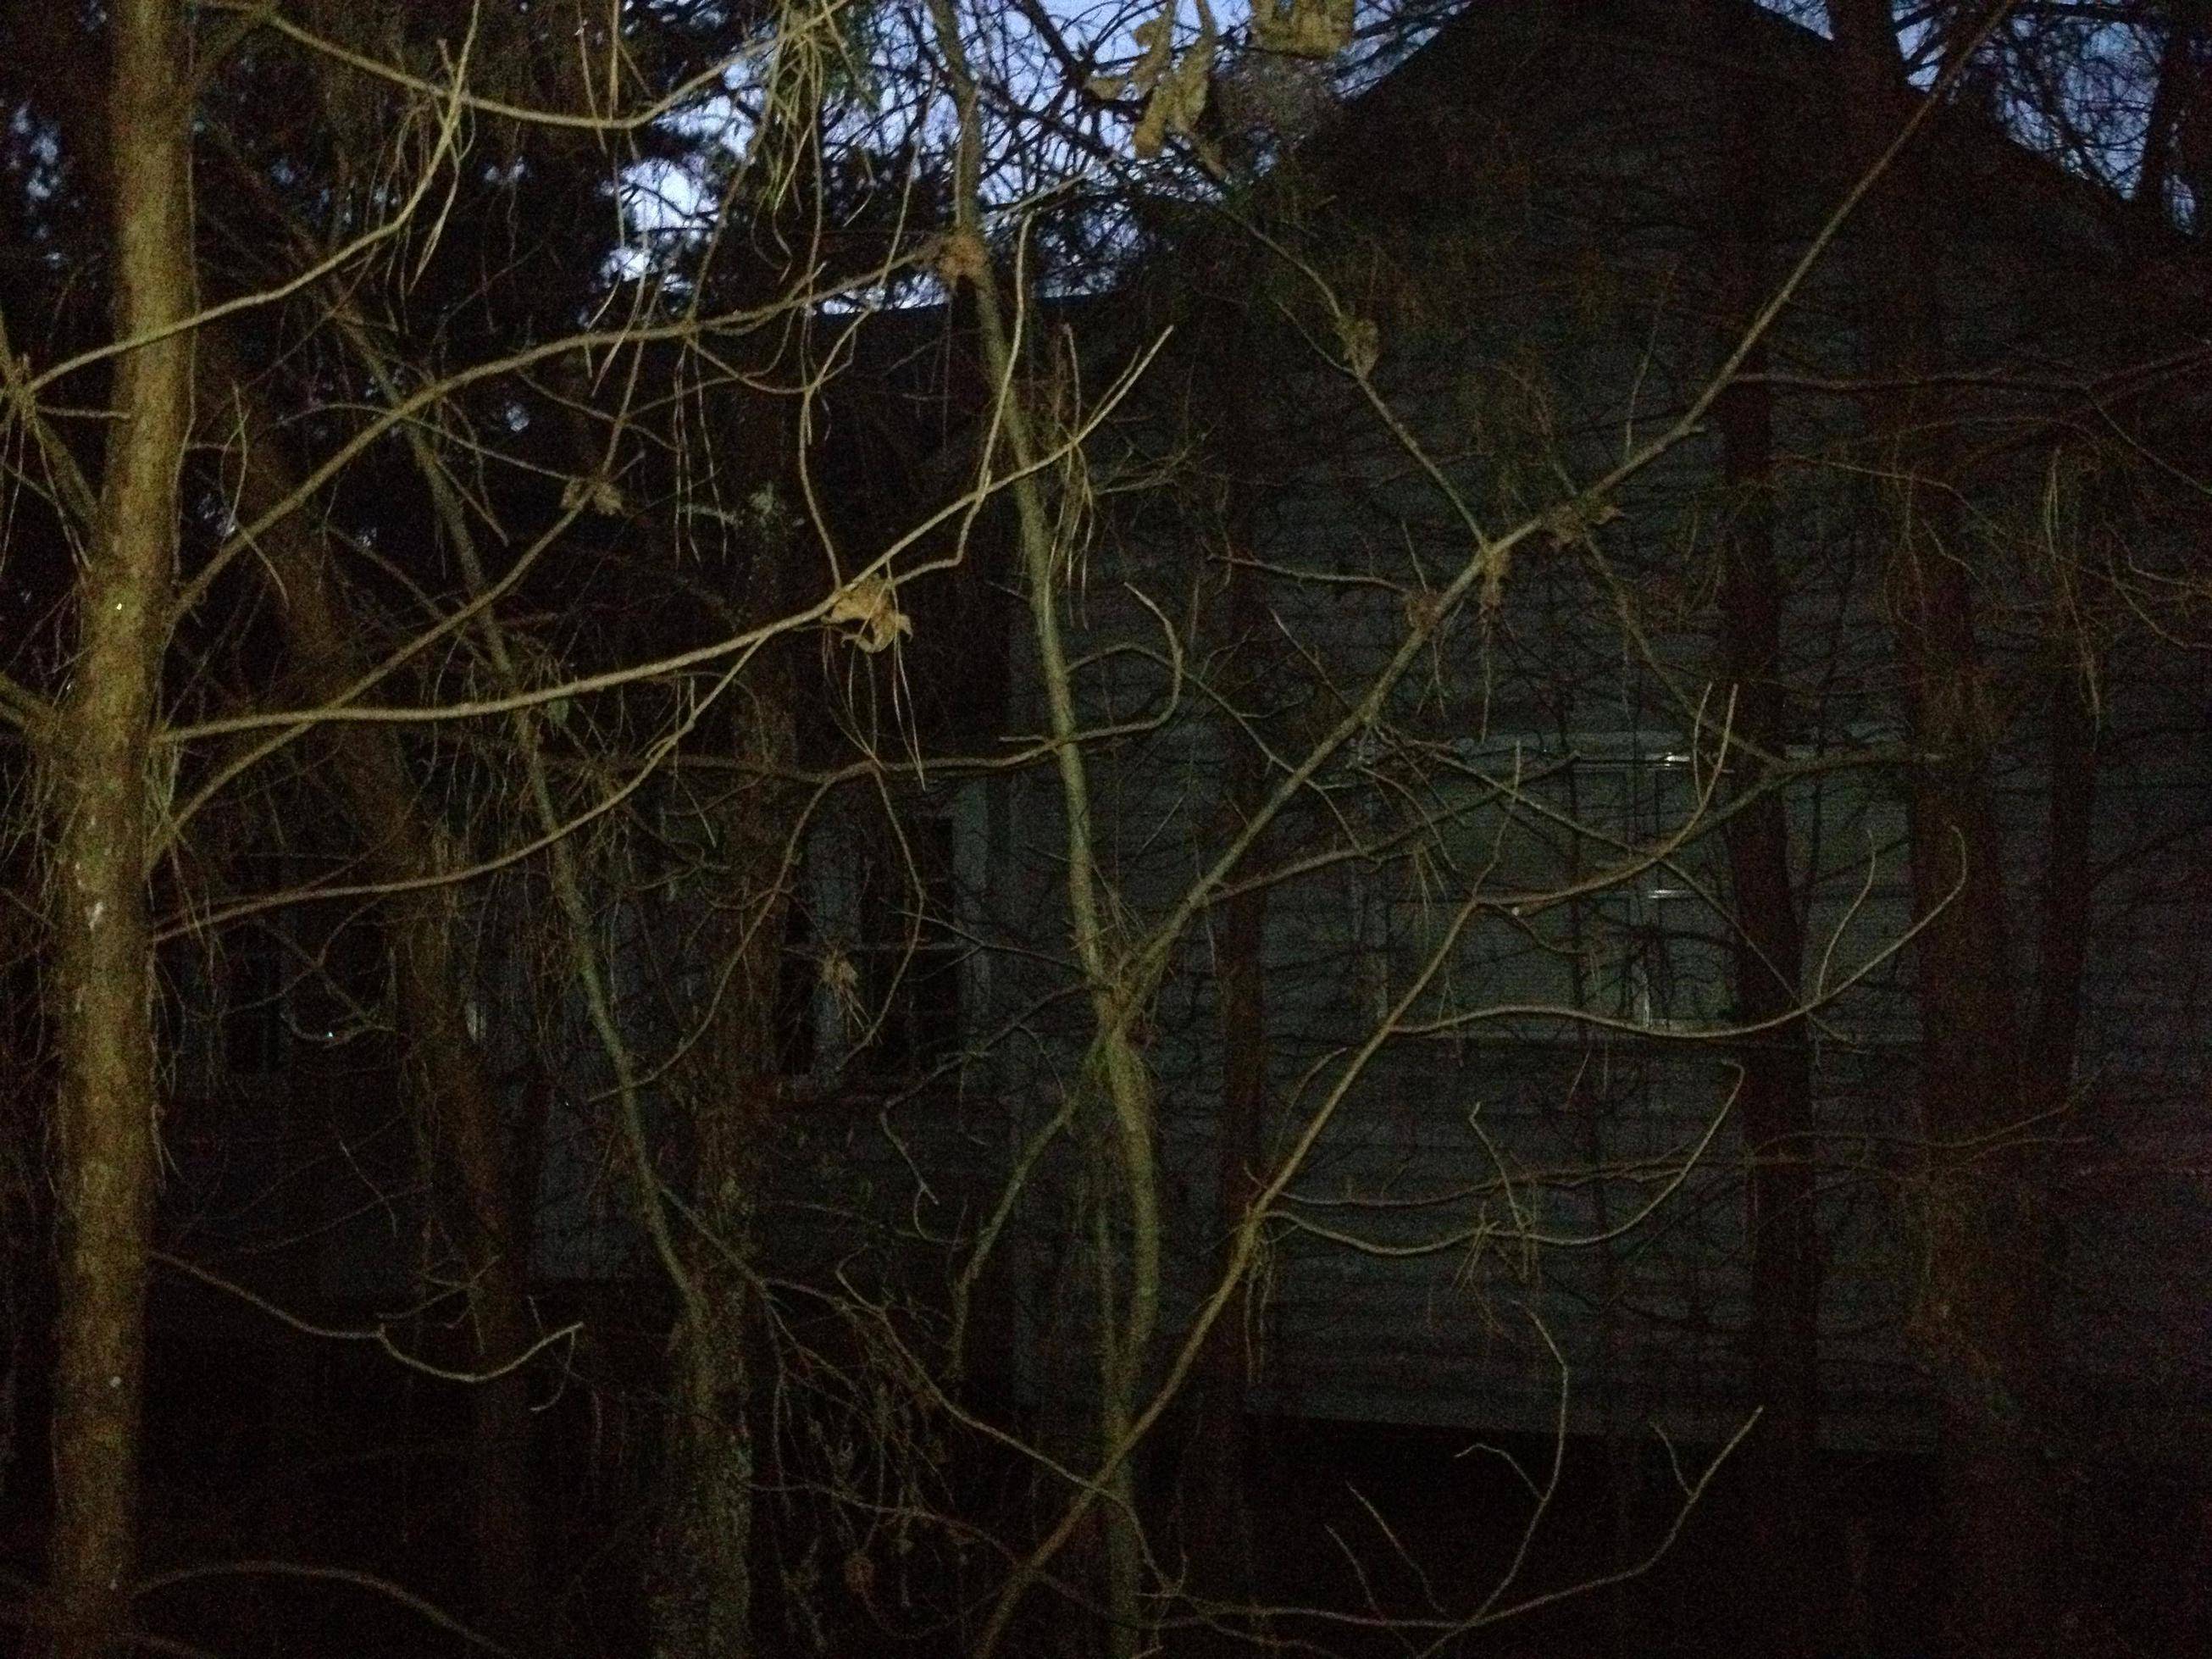 Creepy House I Found in the Woods | Creepypasta Wiki | FANDOM ...